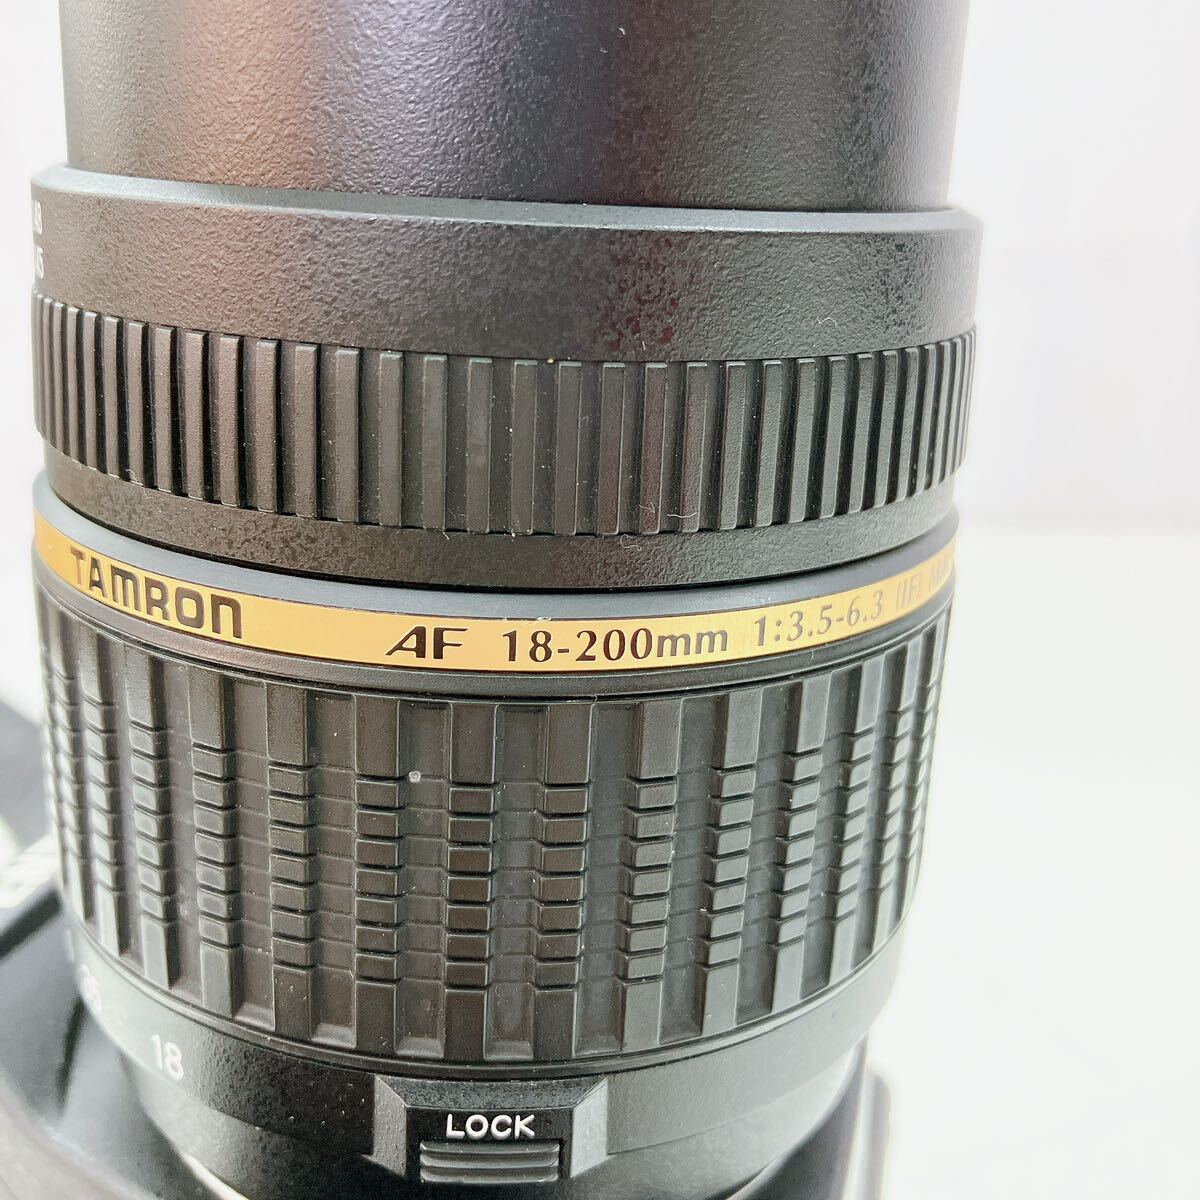 4AD105 1 jpy ~ PENTAX K-5 2S single‐lens reflex camera lens TAMRON AF 18-200mm 1:3.5-6.3 digital camera digital camera Pentax case attaching 